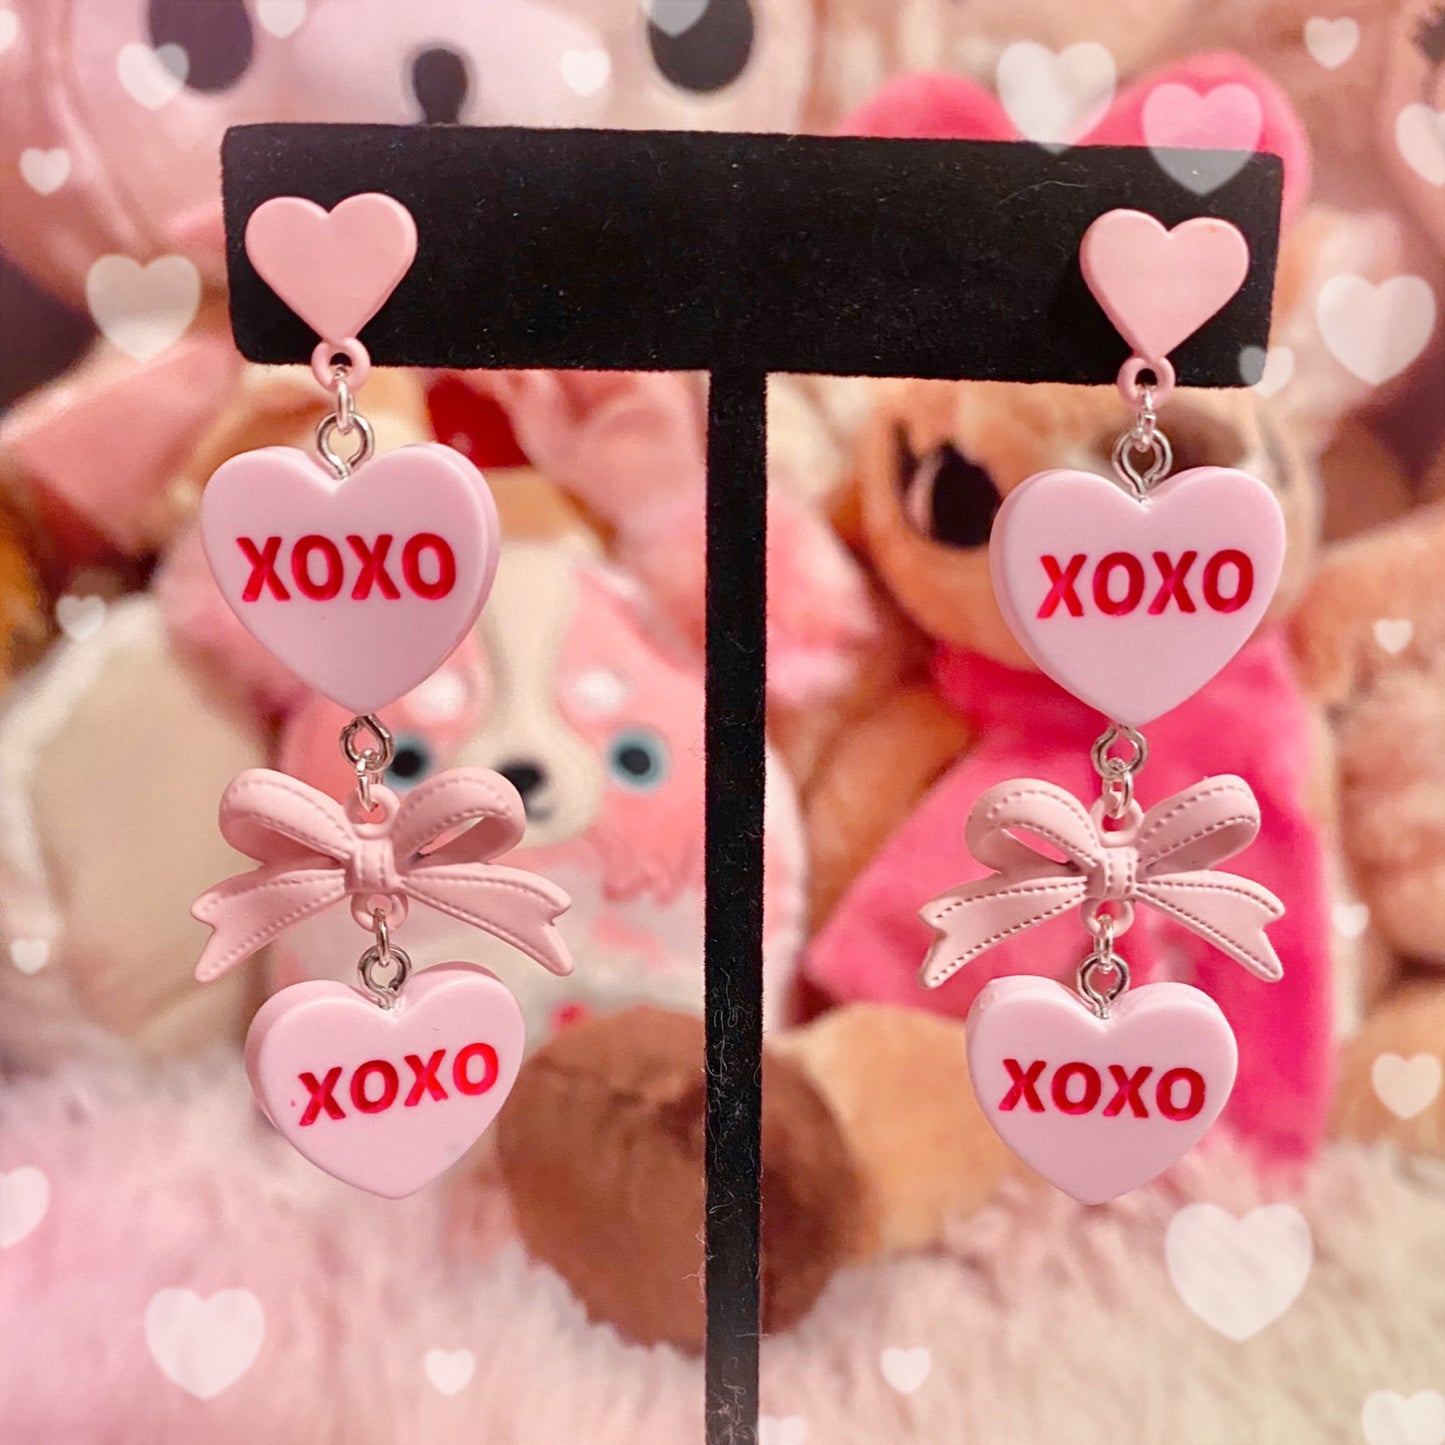 Pink Conversation Hearts Earrings